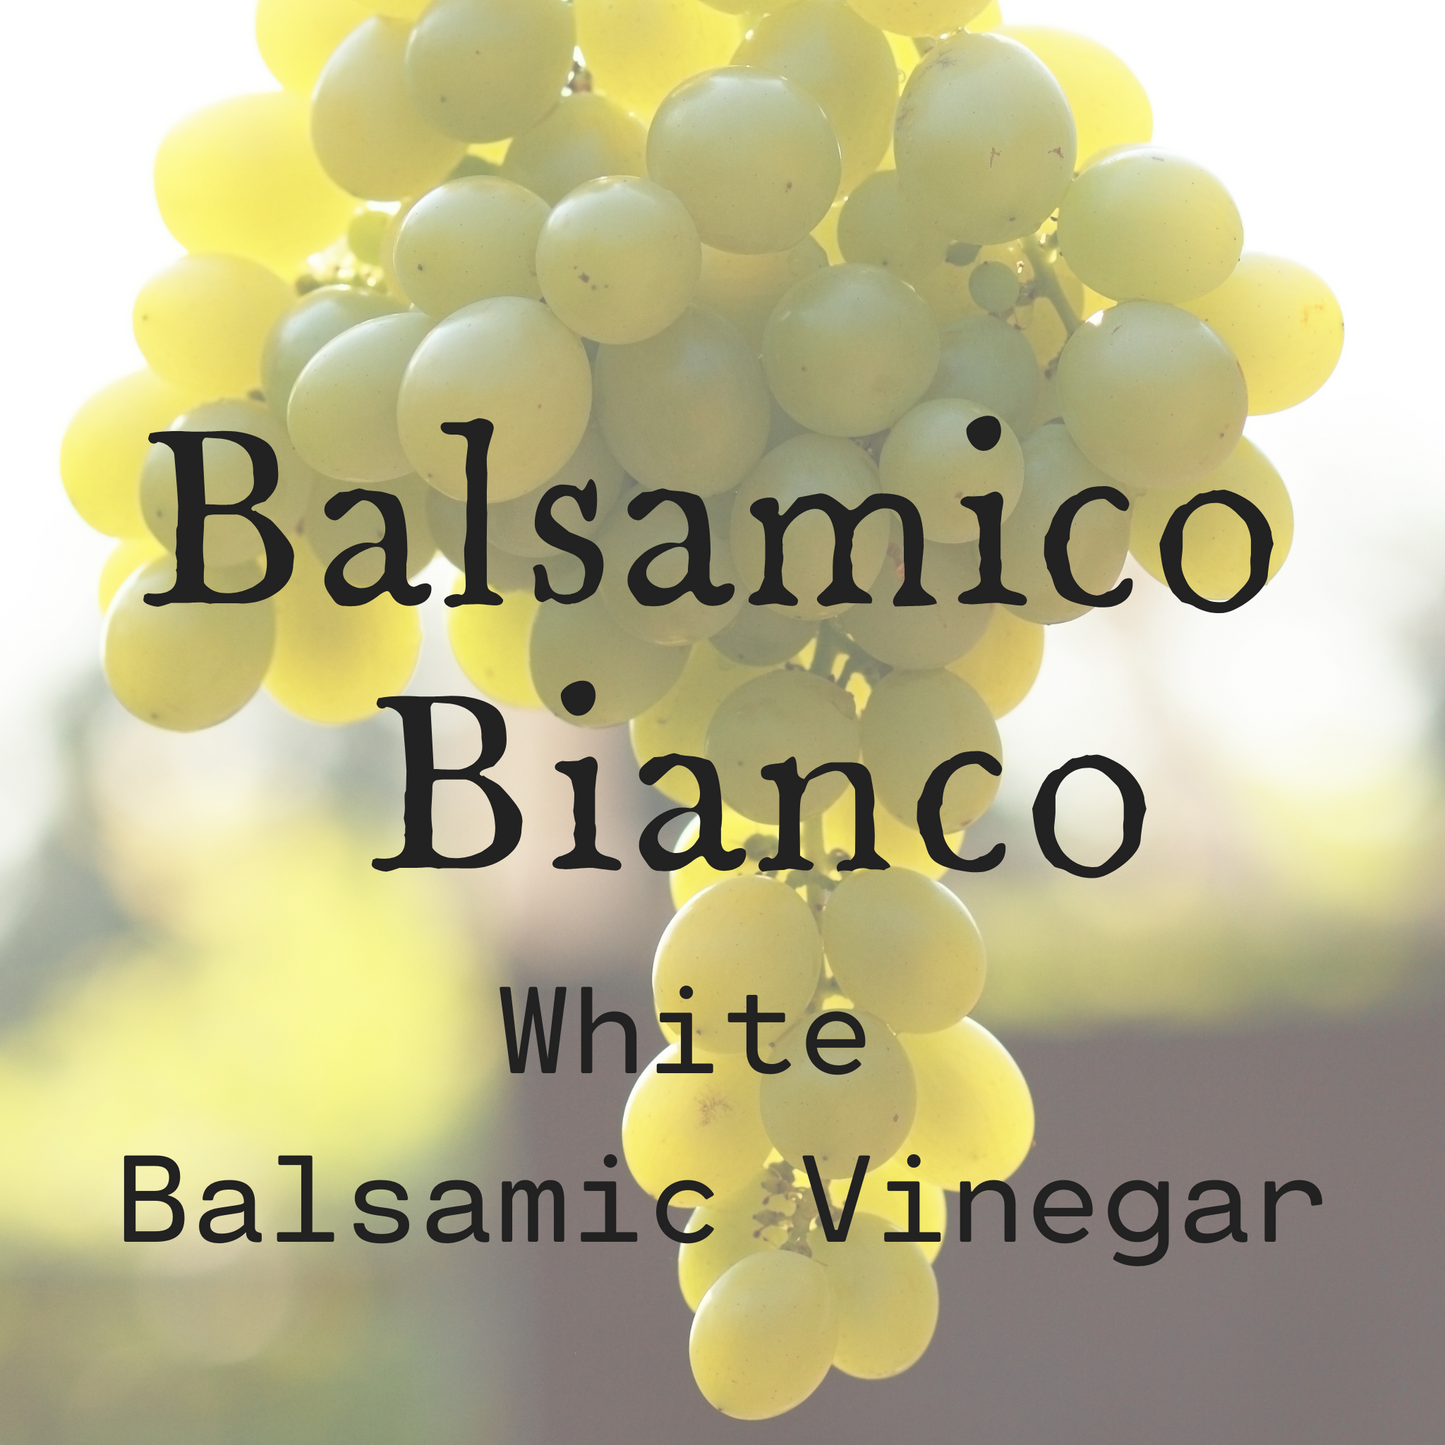 Balsamico Bianco White Balsamic Vinegar